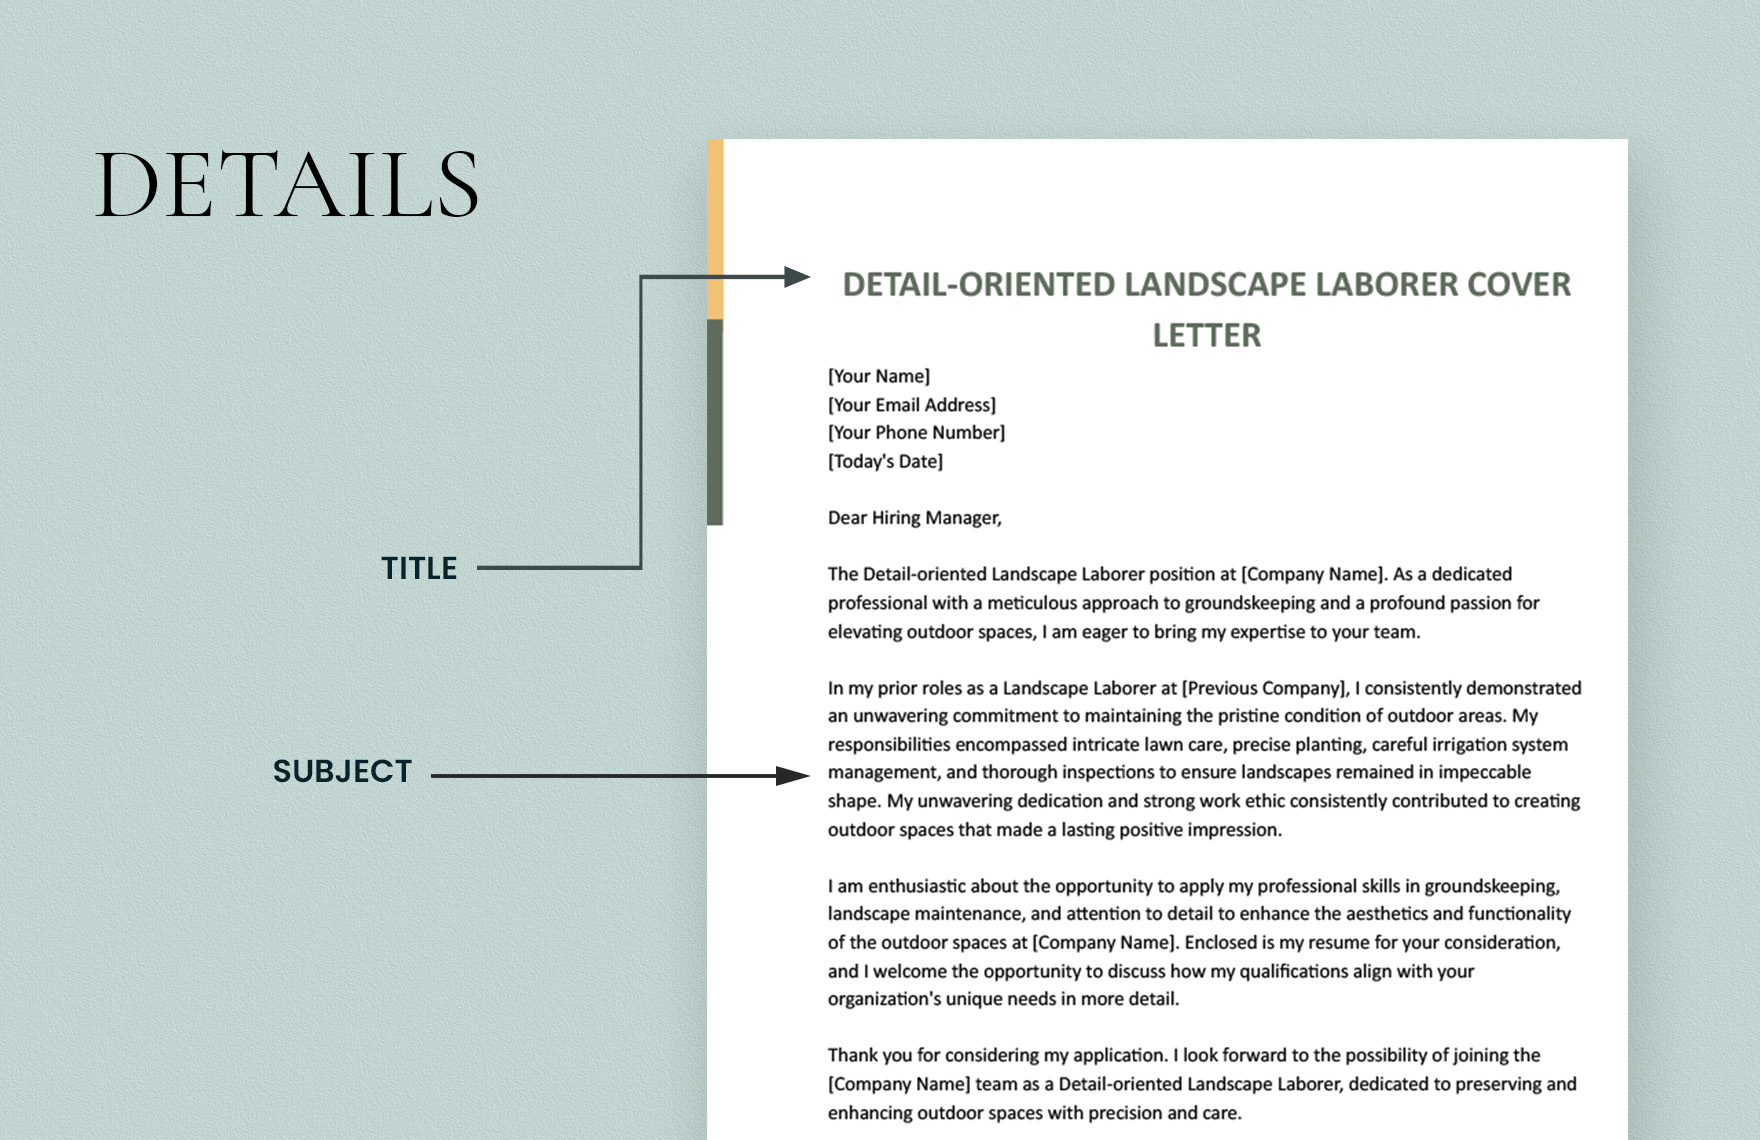 Detail-oriented Landscape Laborer Cover Letter